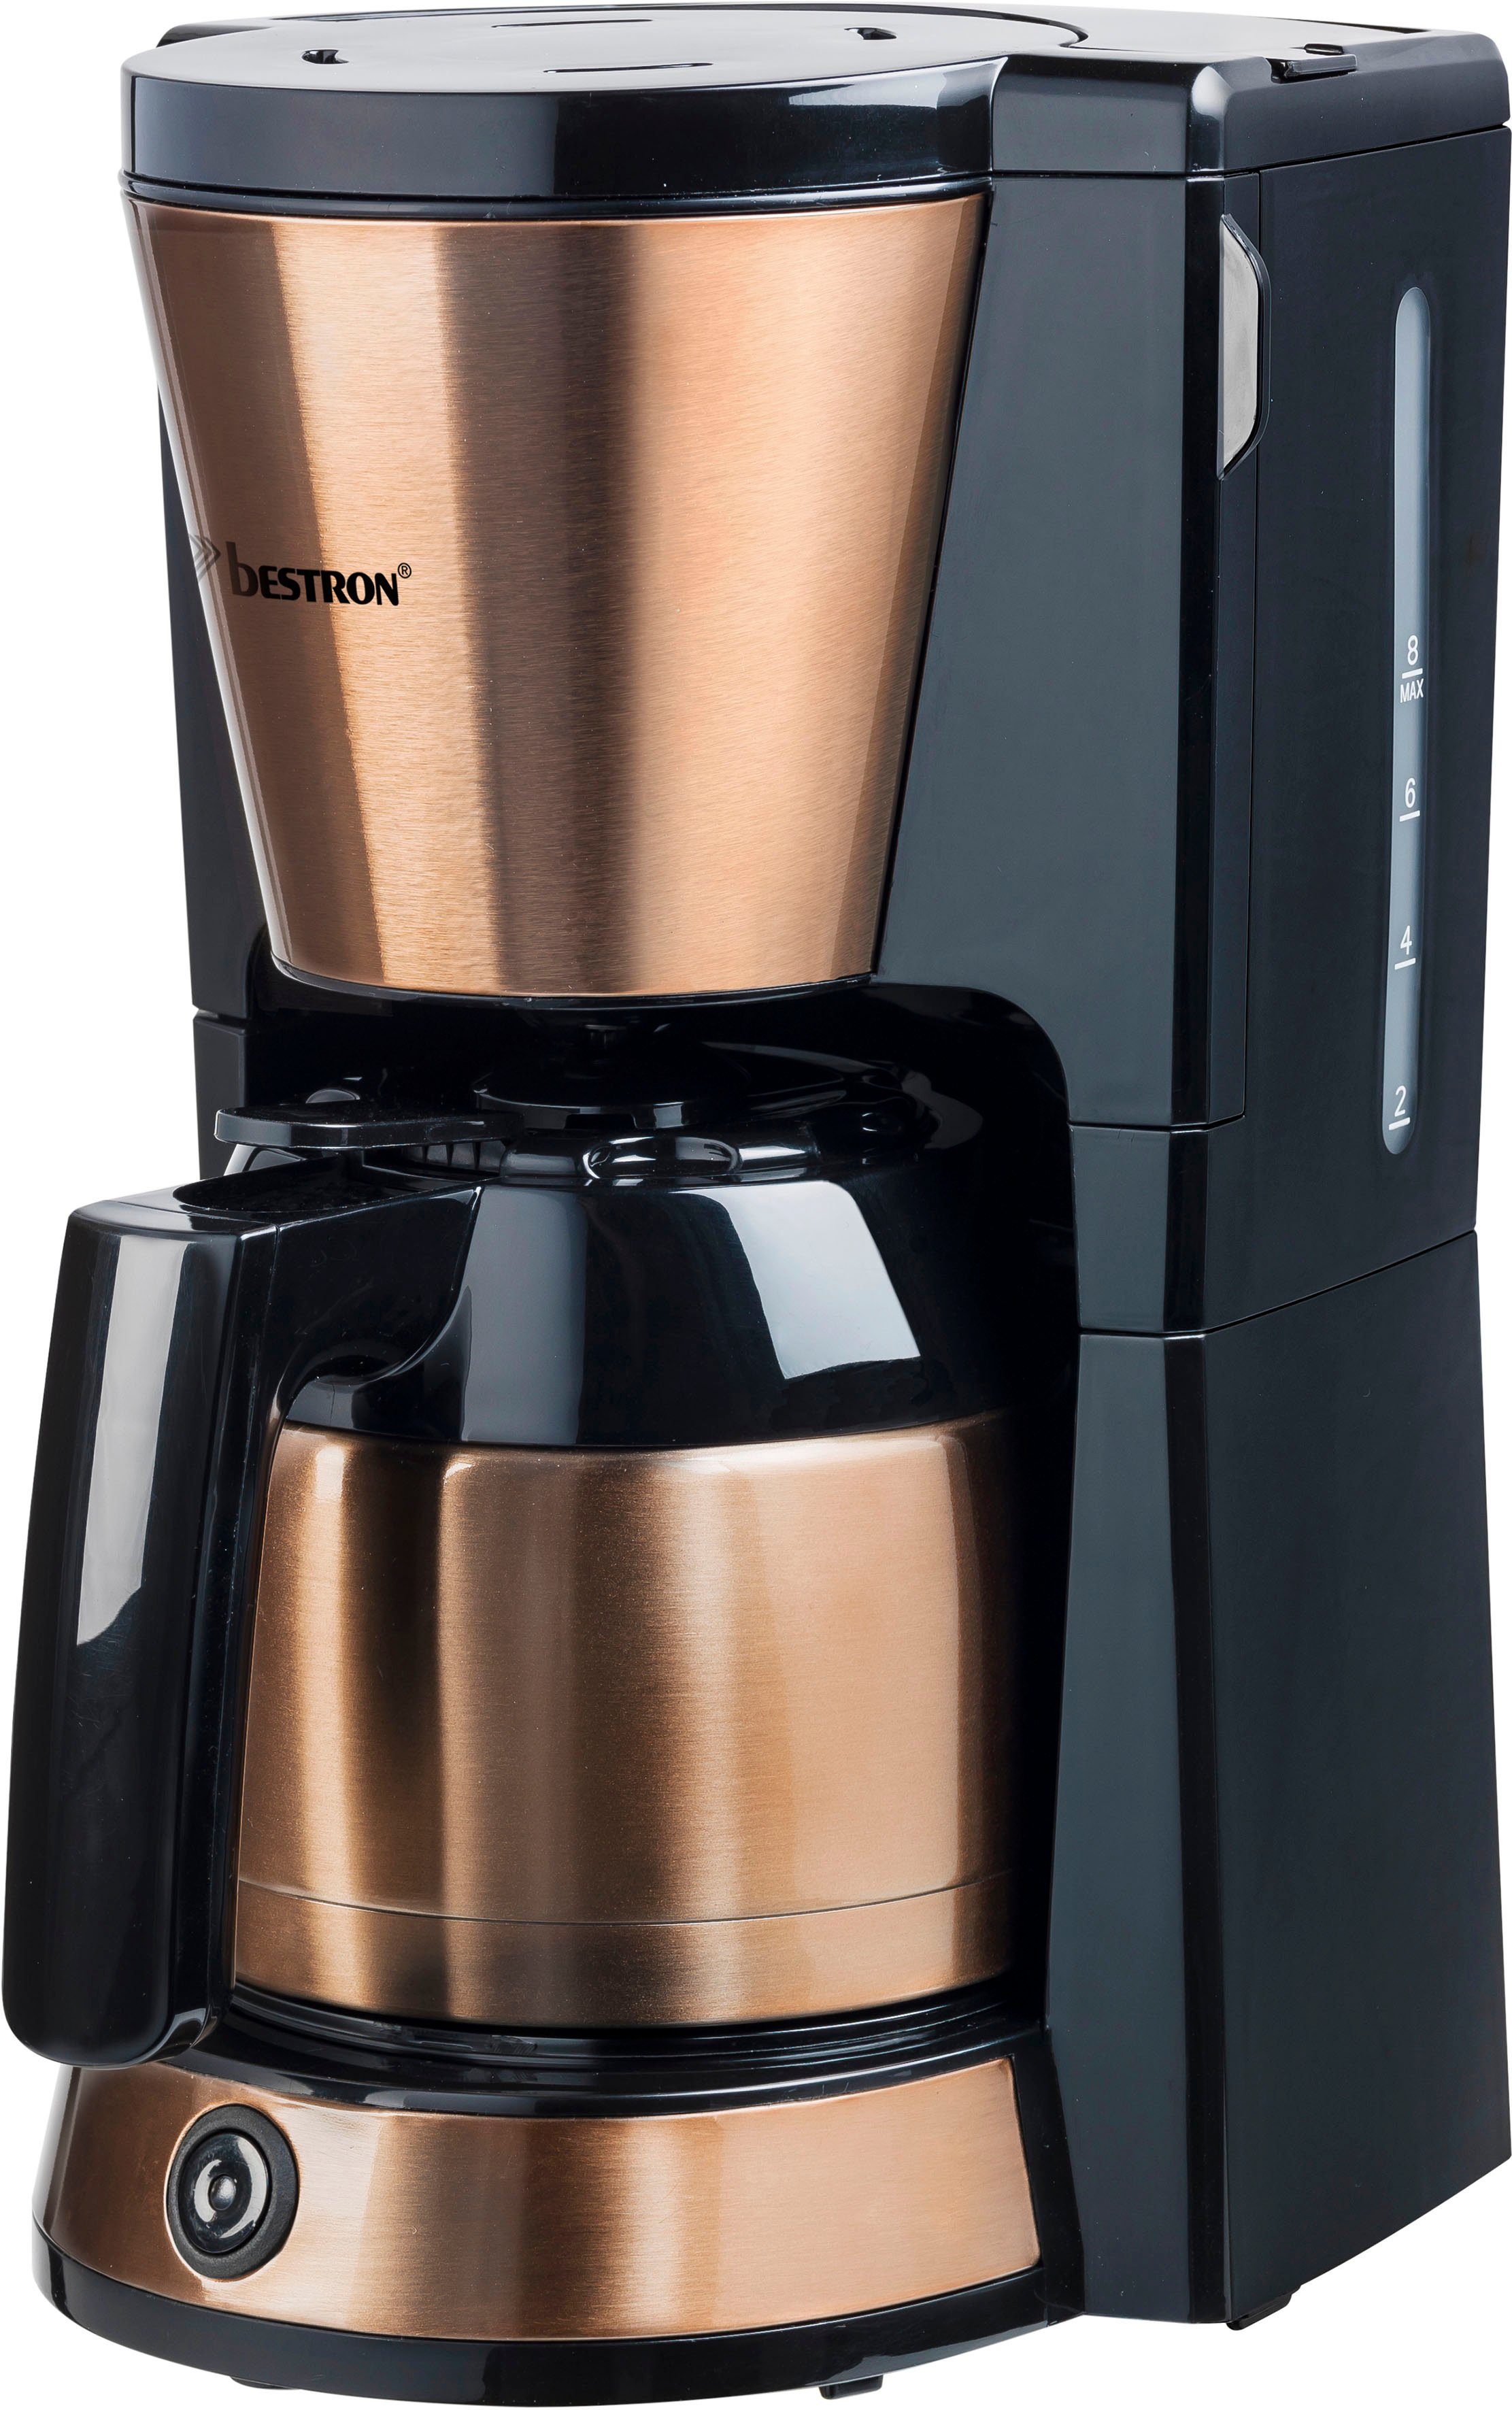 bestron Filterkaffeemaschine ACM1000CO, 1l Kaffeekanne, Papierfilter 1x4, mit Thermokanne, 8 Tassen, 900 W, Edelstahl in Kupfer -Optik | Filterkaffeemaschinen